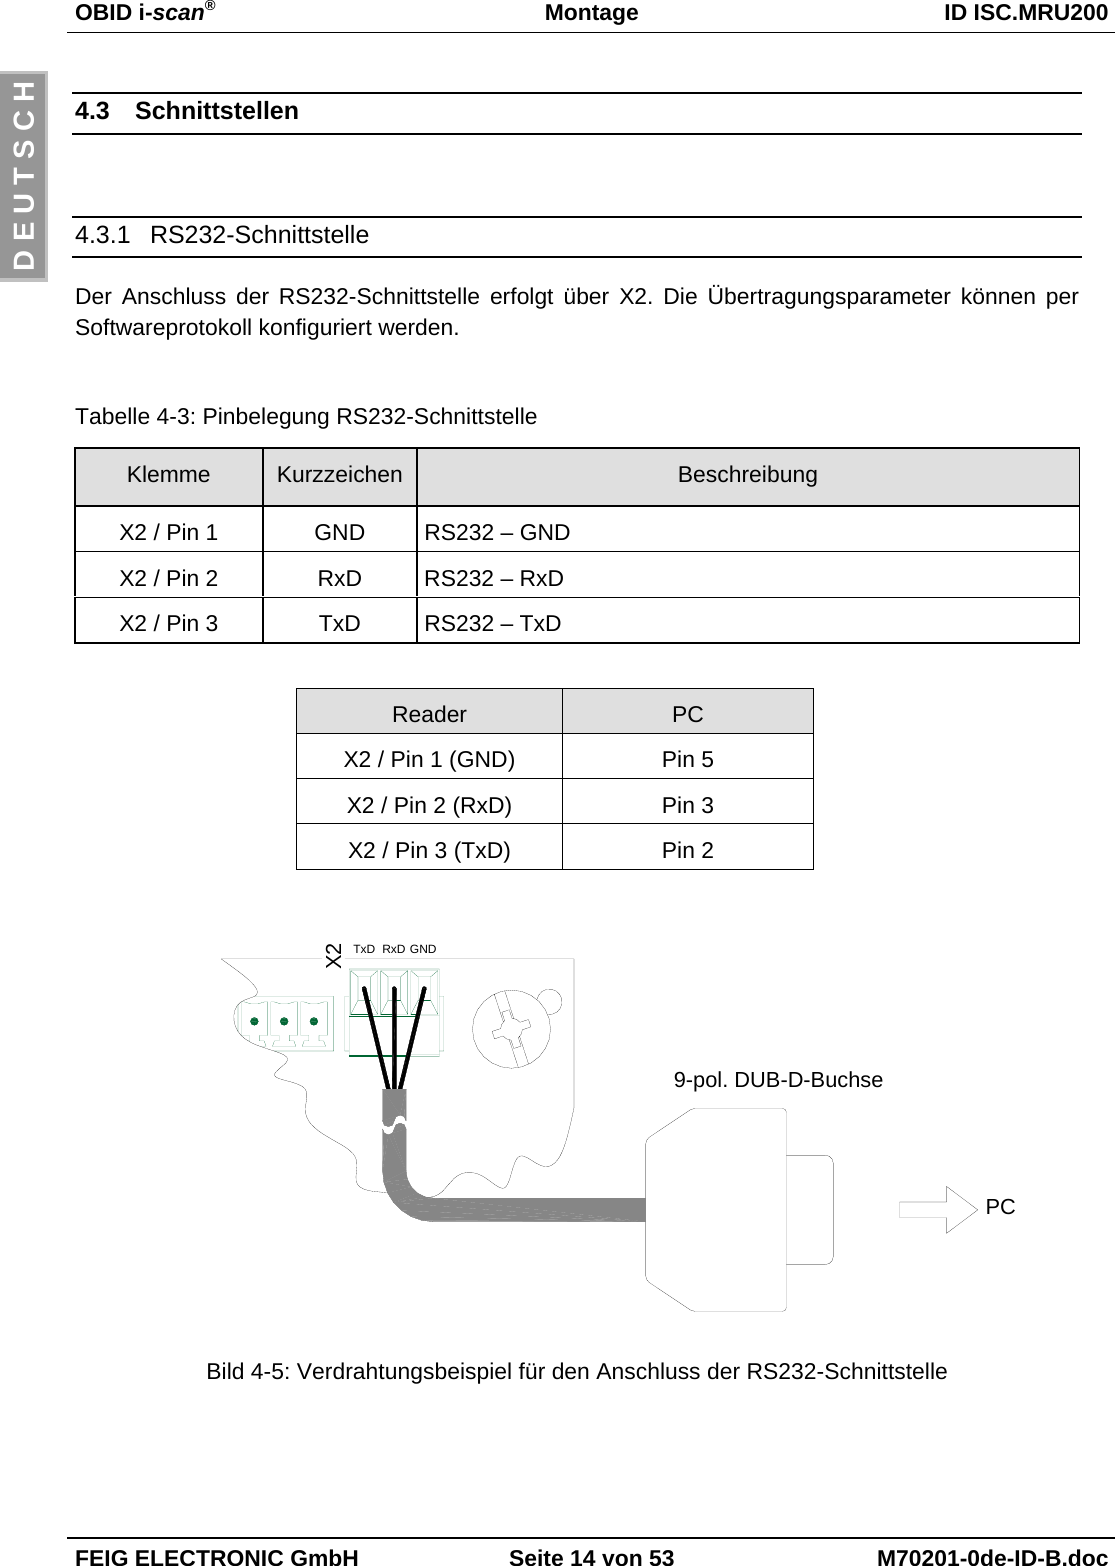 OBID i-scan®Montage ID ISC.MRU200FEIG ELECTRONIC GmbH Seite 14 von 53 M70201-0de-ID-B.docD E U T S C H4.3 Schnittstellen4.3.1 RS232-SchnittstelleDer Anschluss der RS232-Schnittstelle erfolgt über X2. Die Übertragungsparameter können perSoftwareprotokoll konfiguriert werden.Tabelle 4-3: Pinbelegung RS232-SchnittstelleKlemme Kurzzeichen BeschreibungX2 / Pin 1 GND RS232 – GNDX2 / Pin 2 RxD RS232 – RxDX2 / Pin 3 TxD RS232 – TxDReader PCX2 / Pin 1 (GND) Pin 5X2 / Pin 2 (RxD) Pin 3X2 / Pin 3 (TxD) Pin 2Bild 4-5: Verdrahtungsbeispiel für den Anschluss der RS232-SchnittstelleX2TxD RxD GNDPC9-pol. DUB-D-Buchse